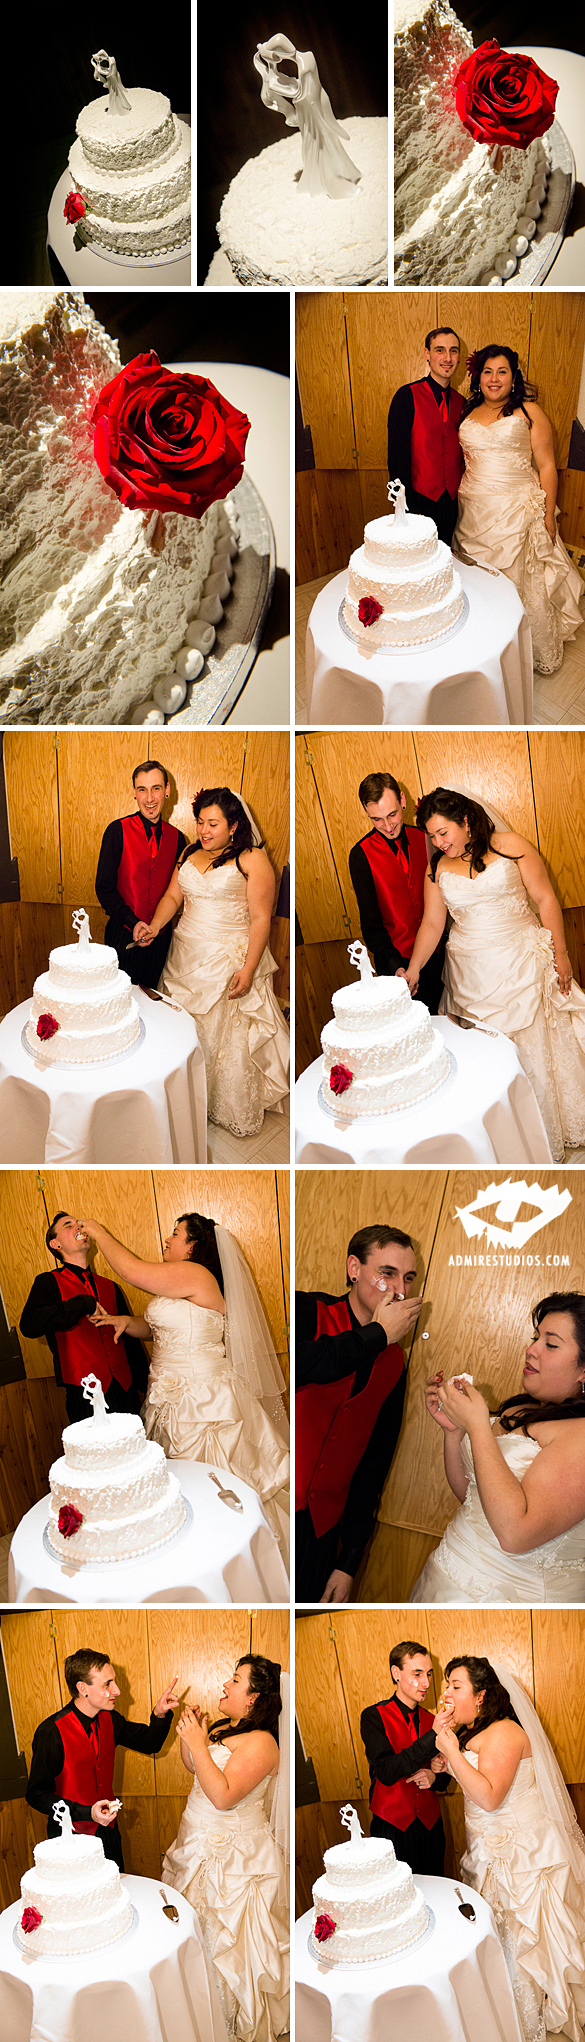 cake cutting wedding photos